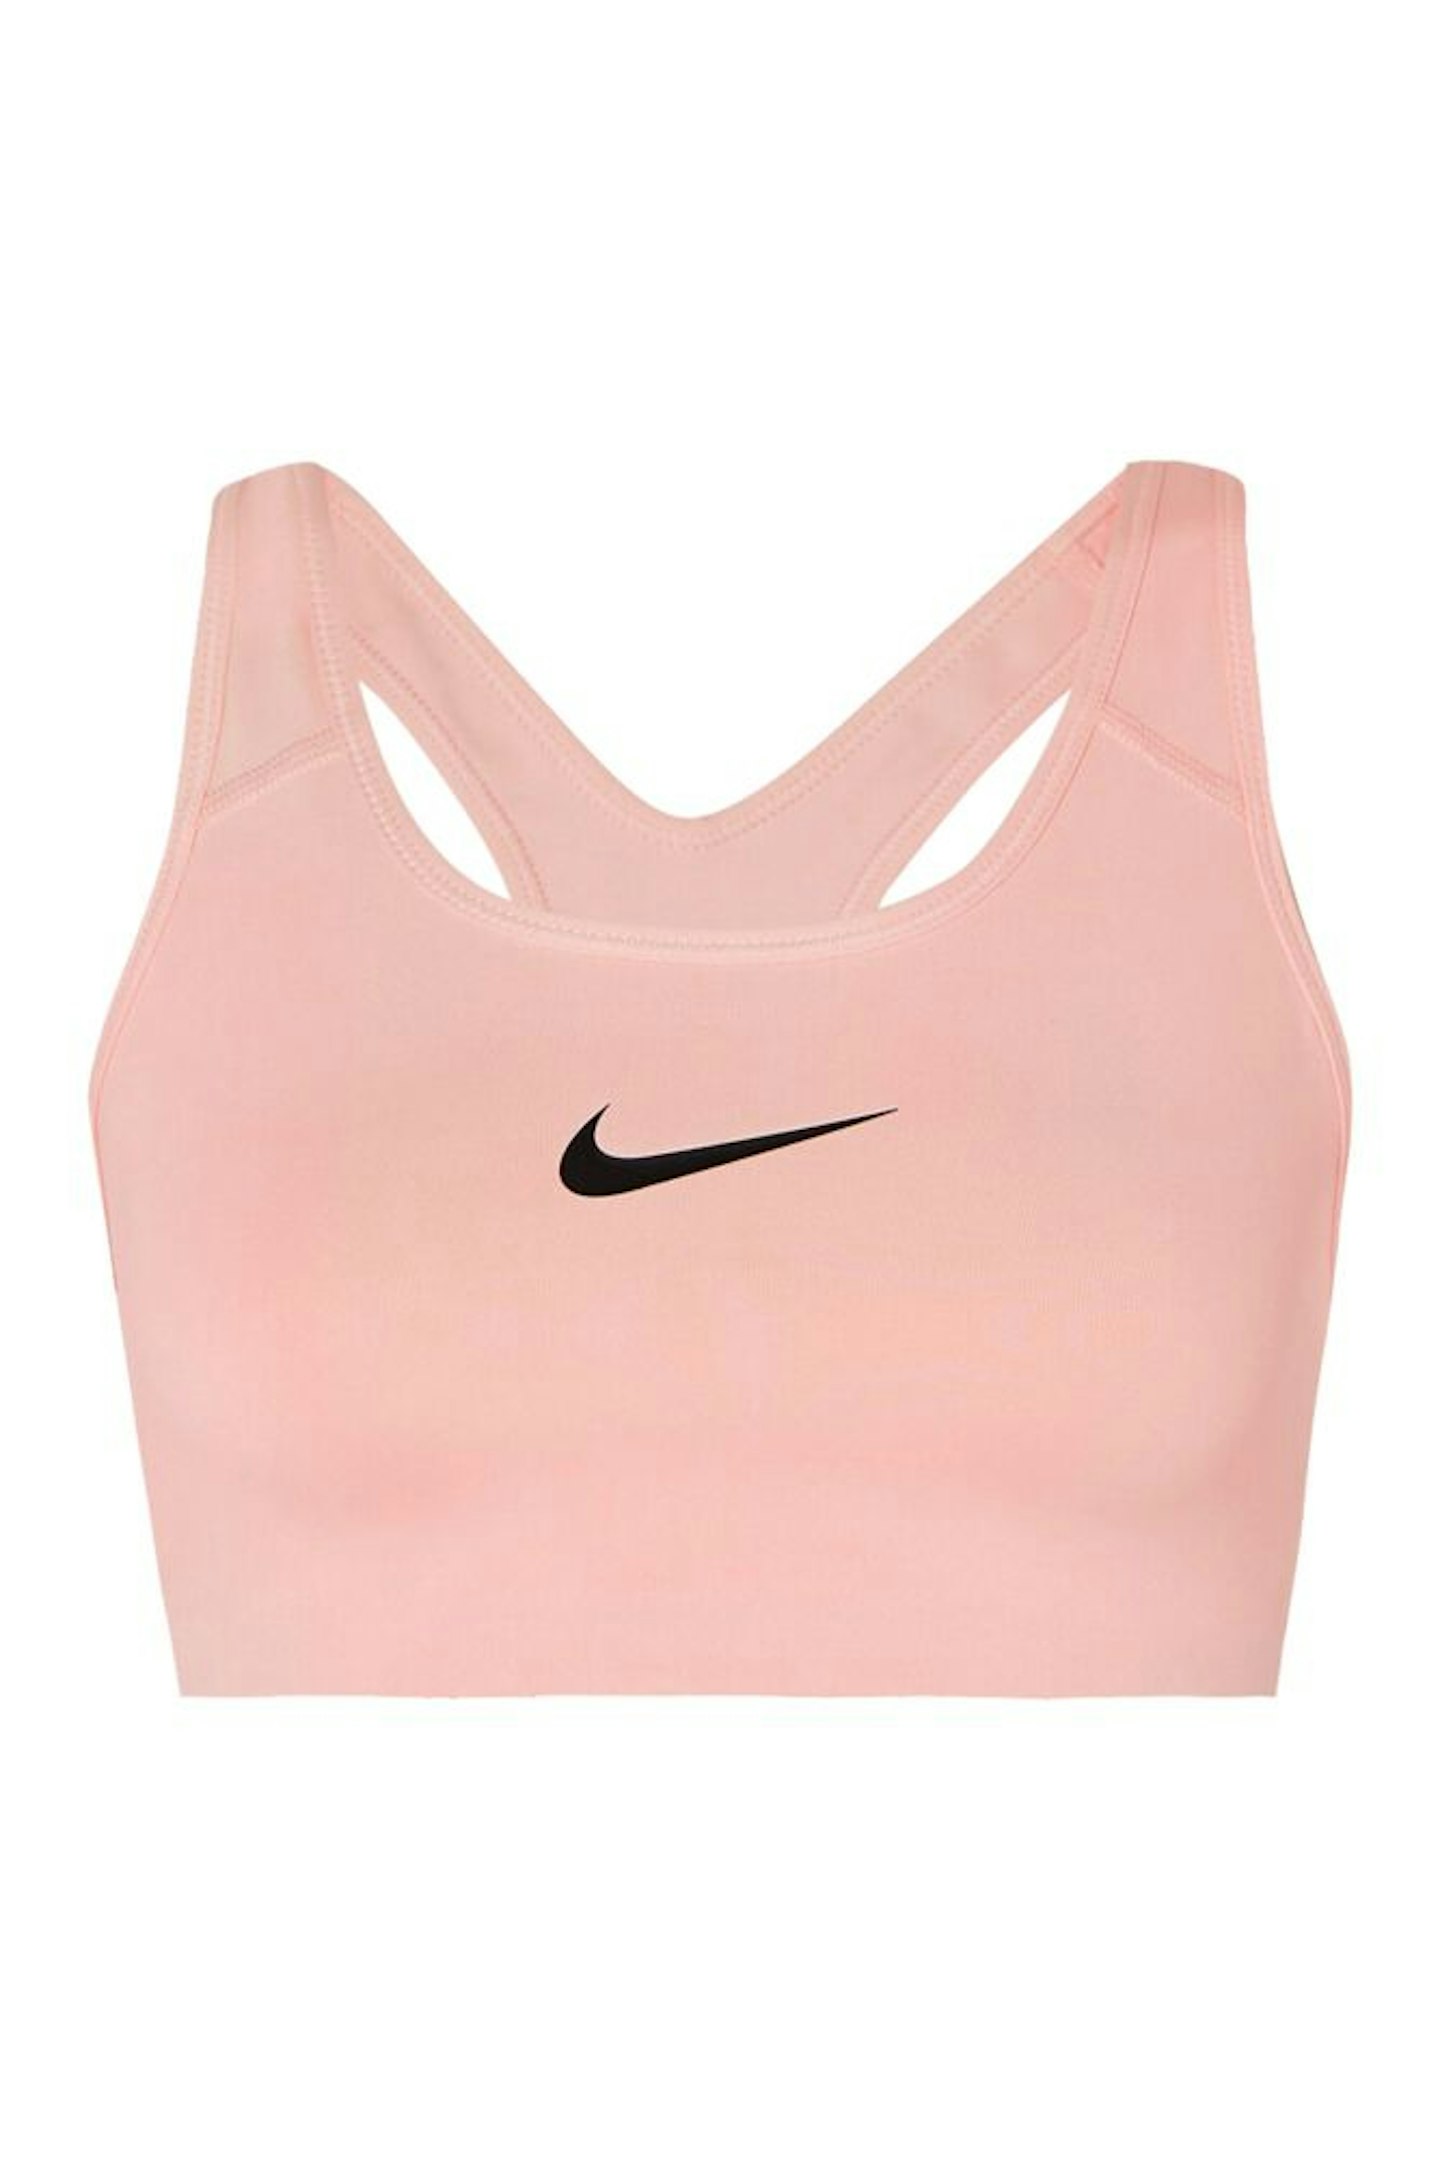 Nike Swoosh printed stretch sports bra, £27